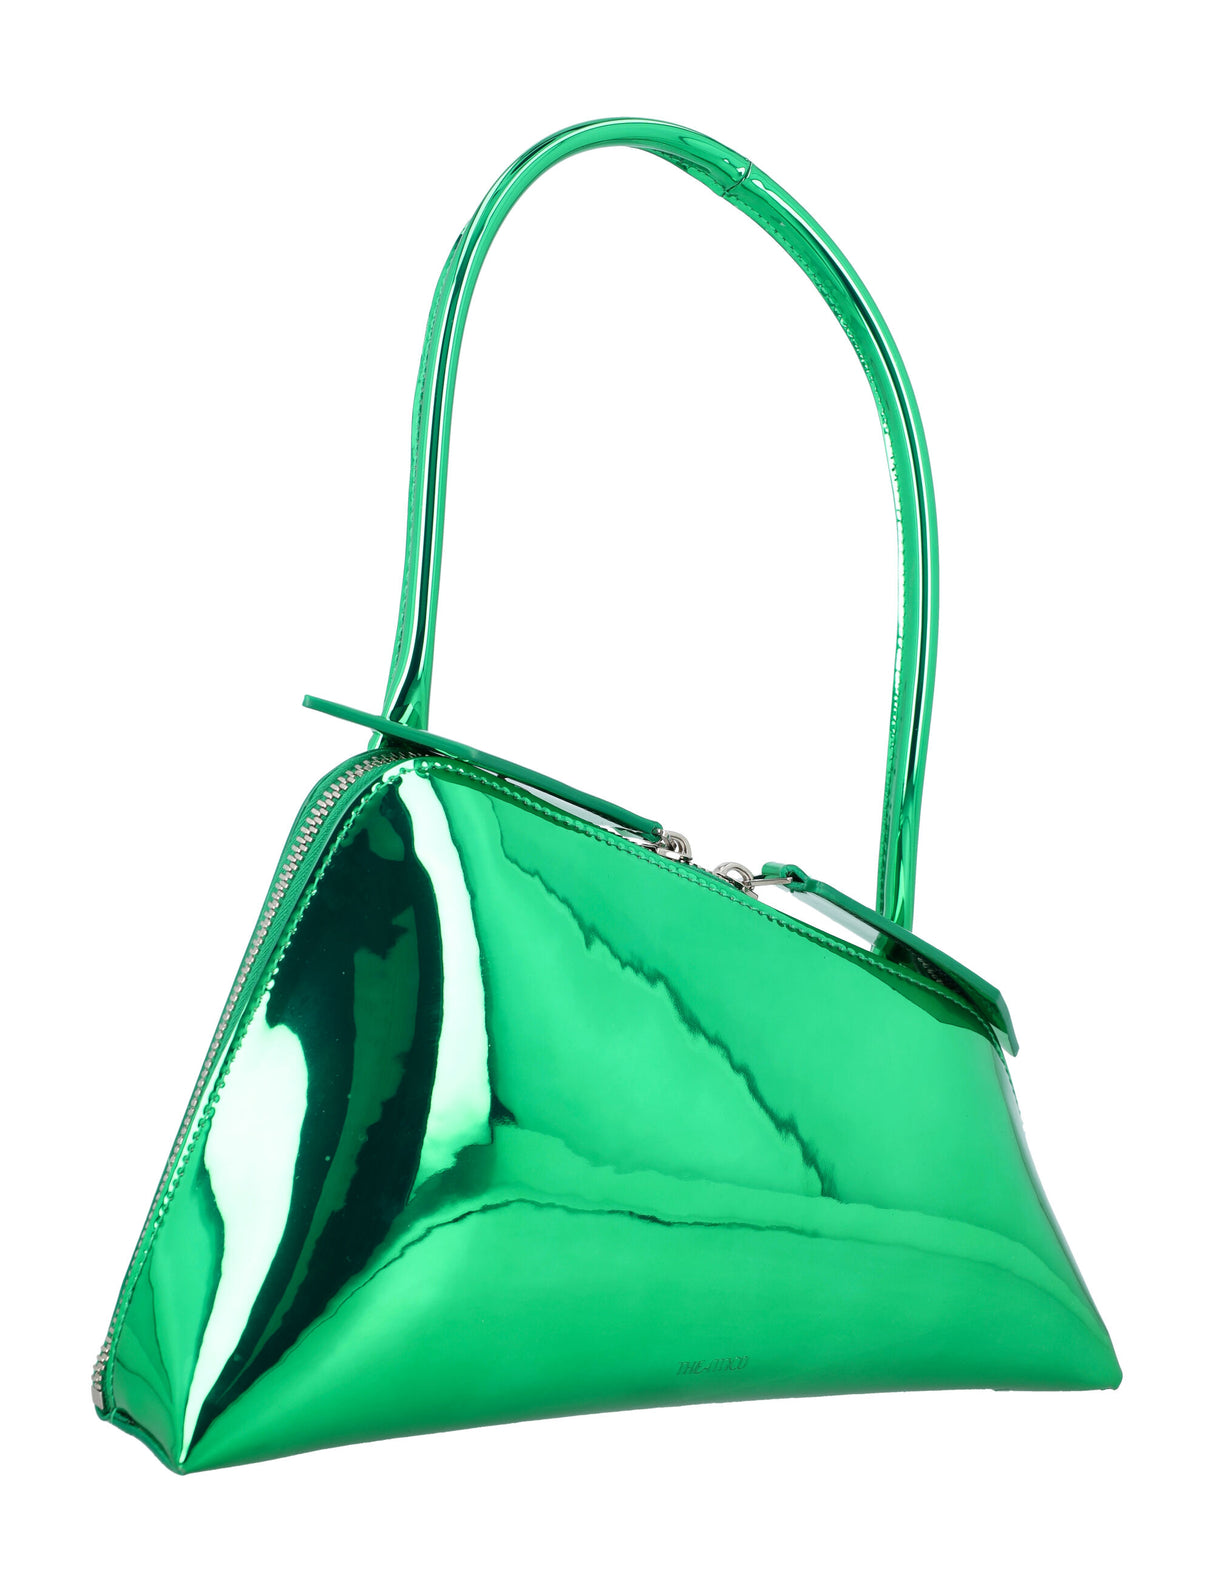 Emerald Green Sunrise Shoulder Handbag for Women